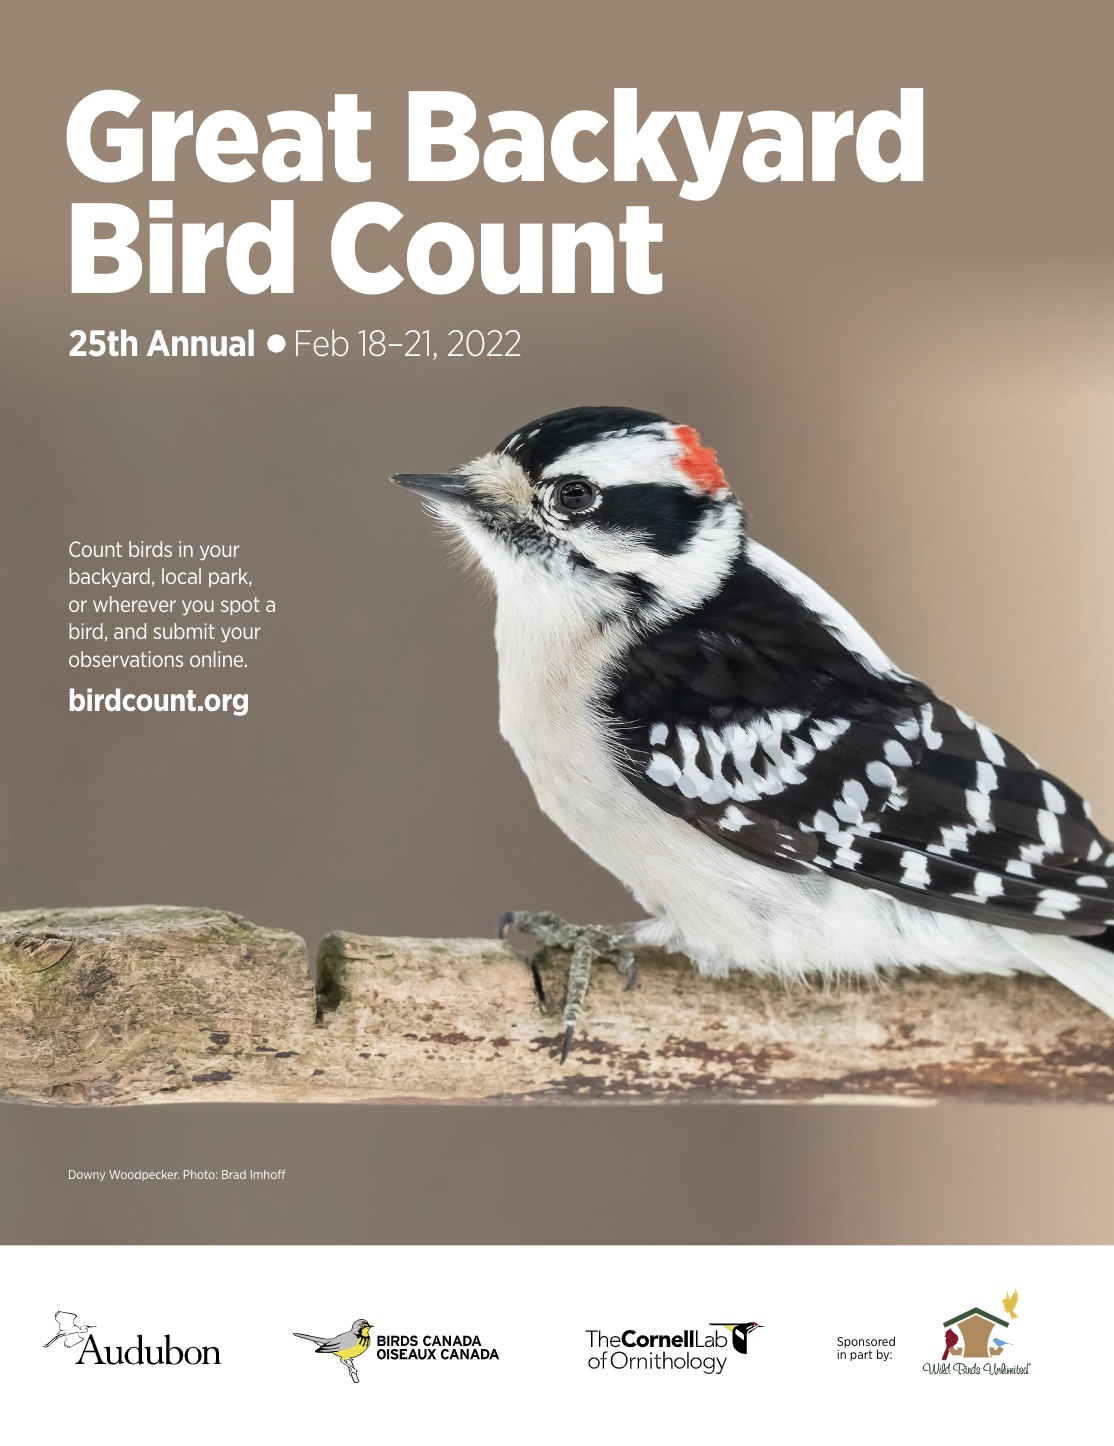 Project Feederwatch: Great Backyard Bird Count 25th Annual Feb 18-21, 2022